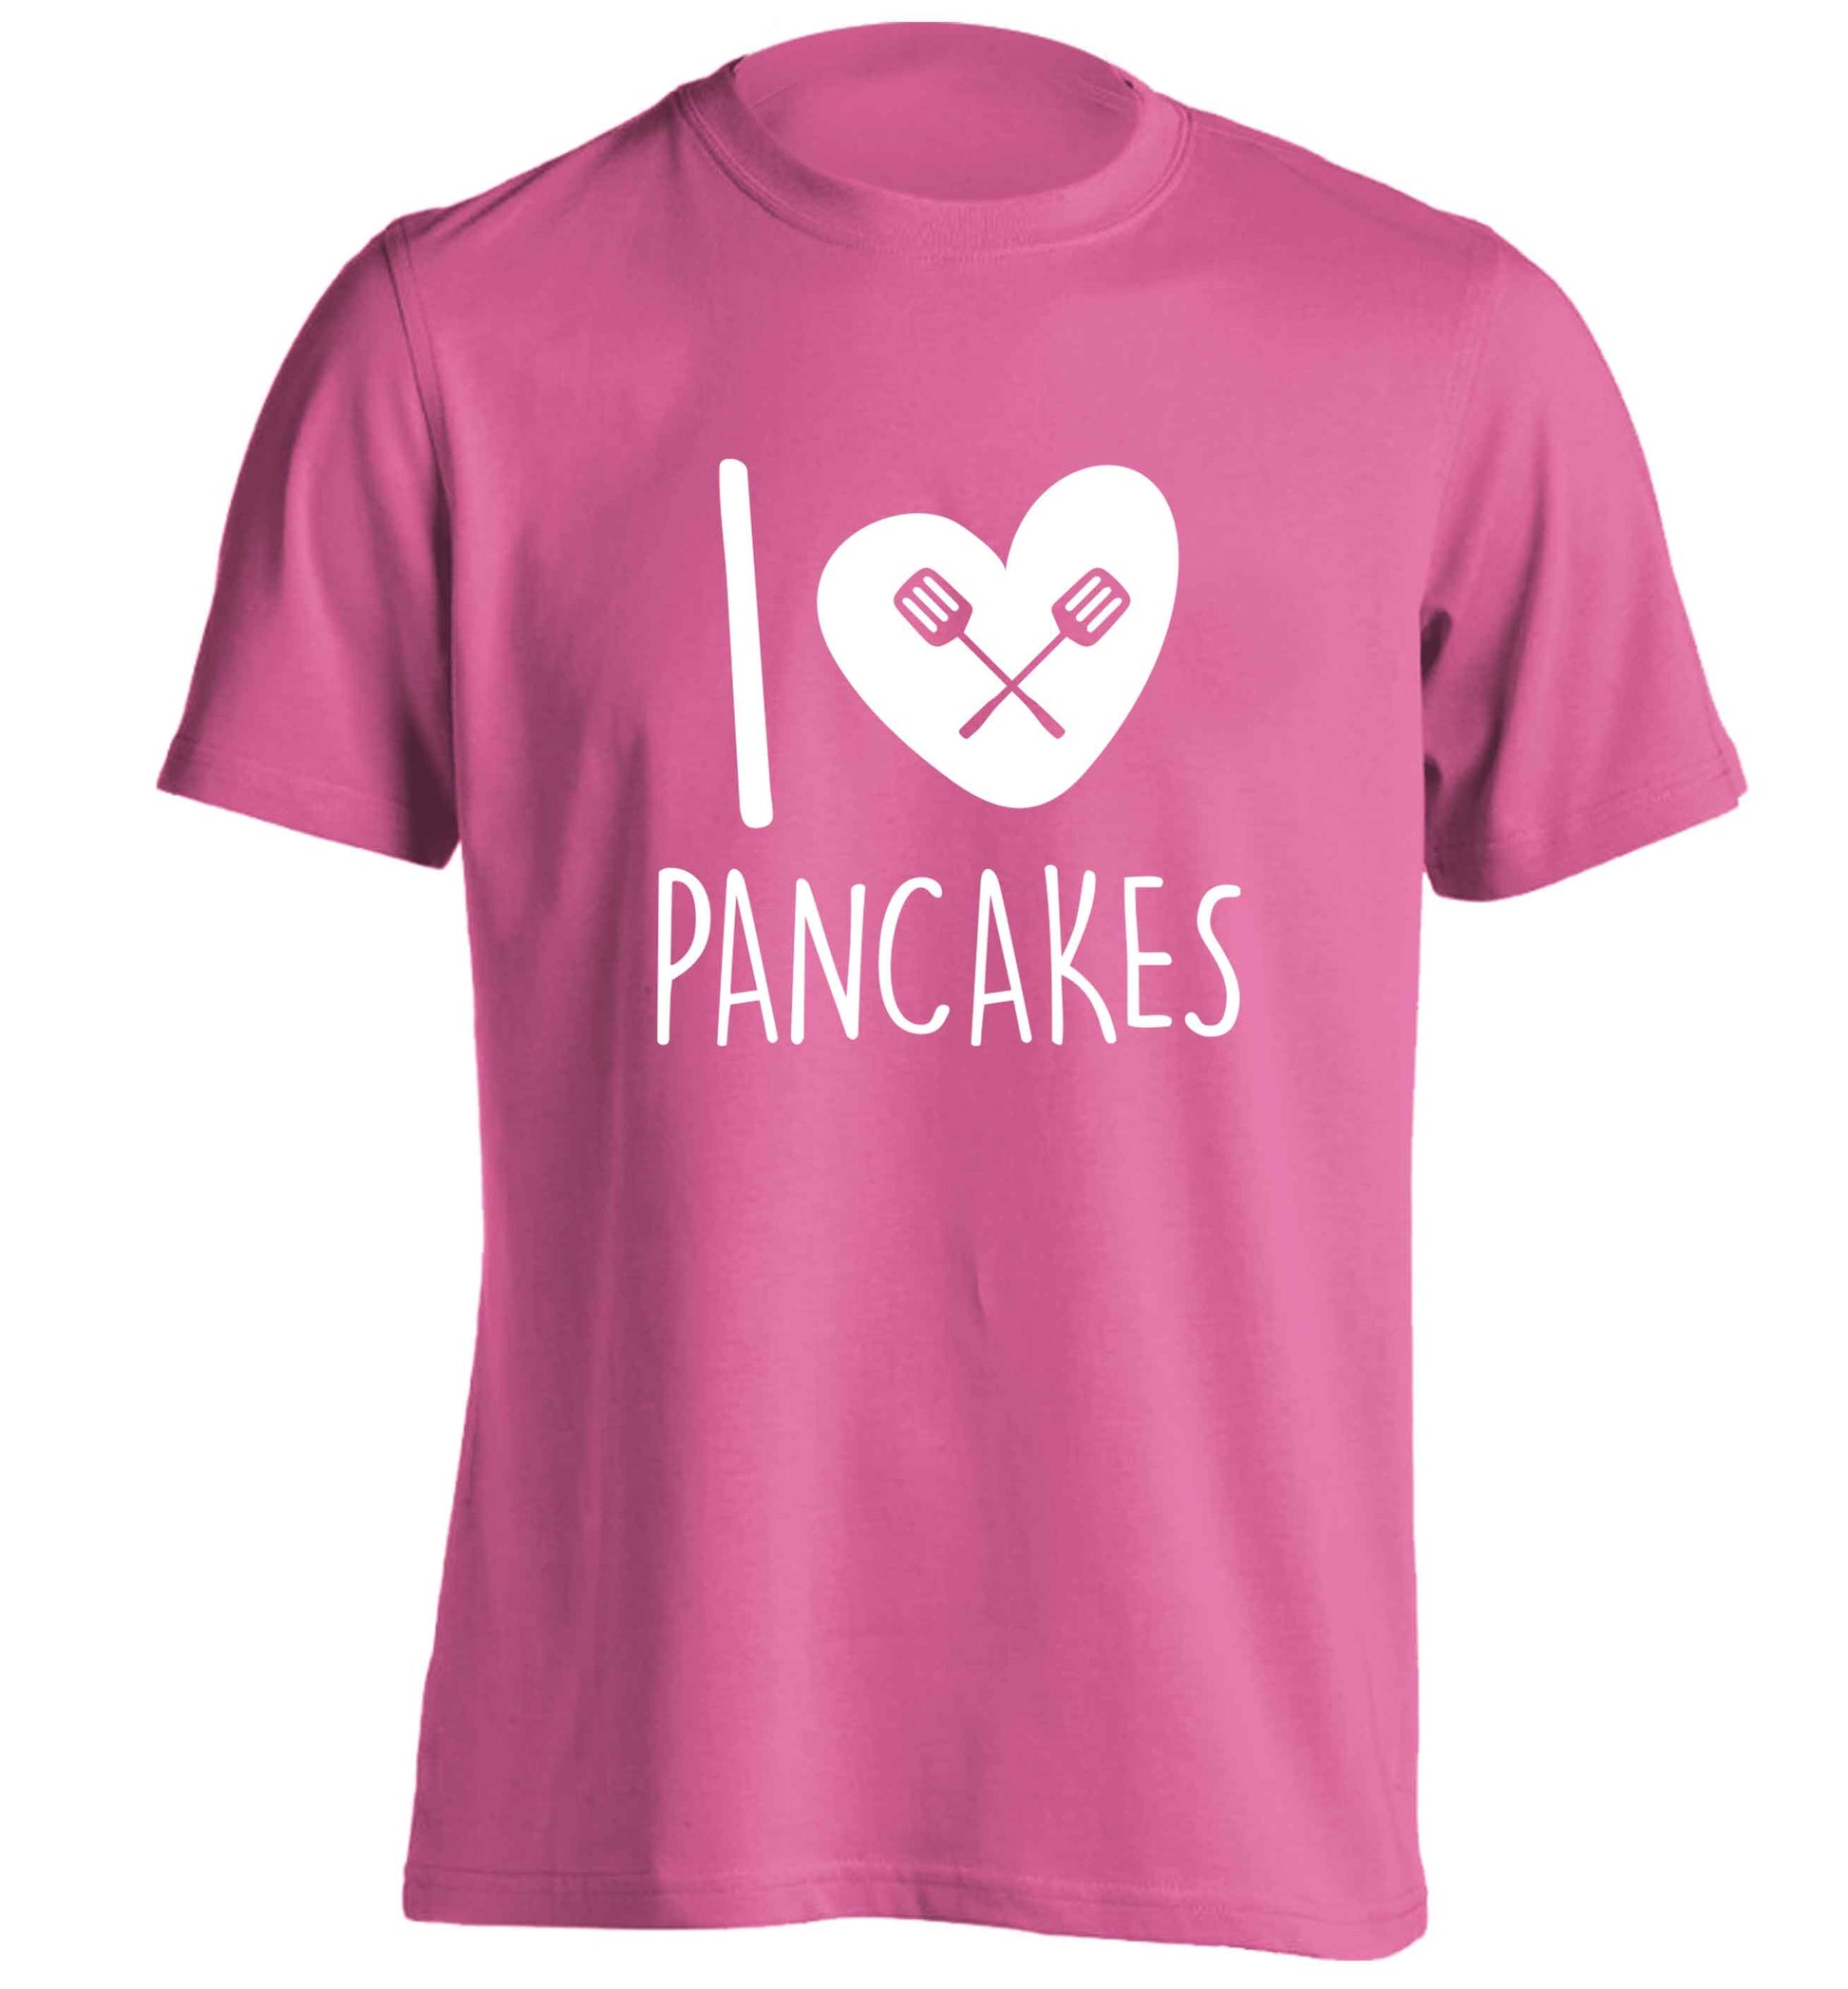 I love pancakes adults unisex pink Tshirt 2XL